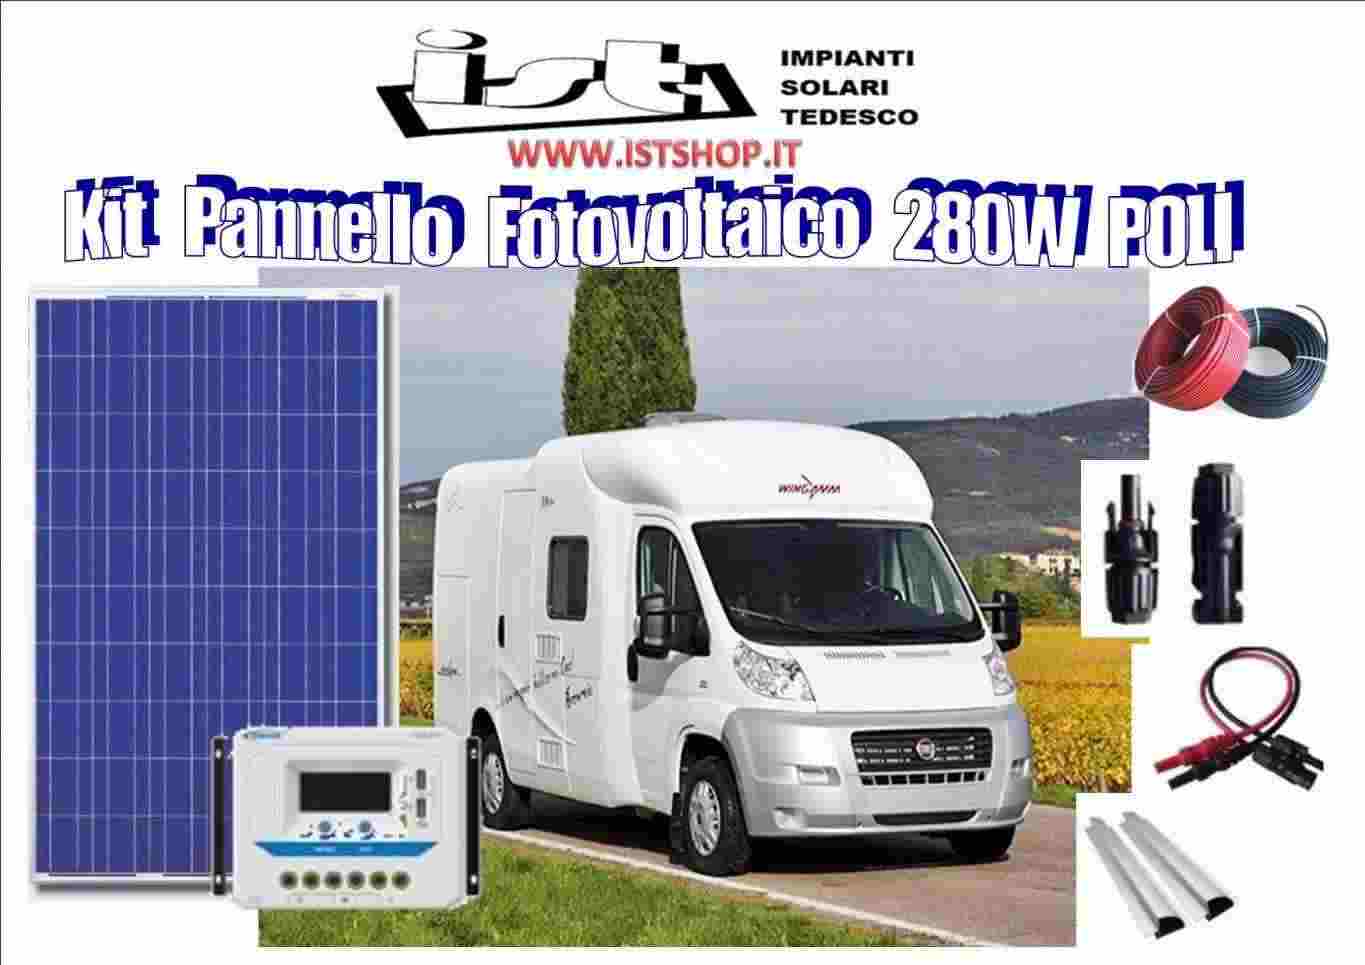 Pannello Fotovoltaico 280W policristallino kit completo